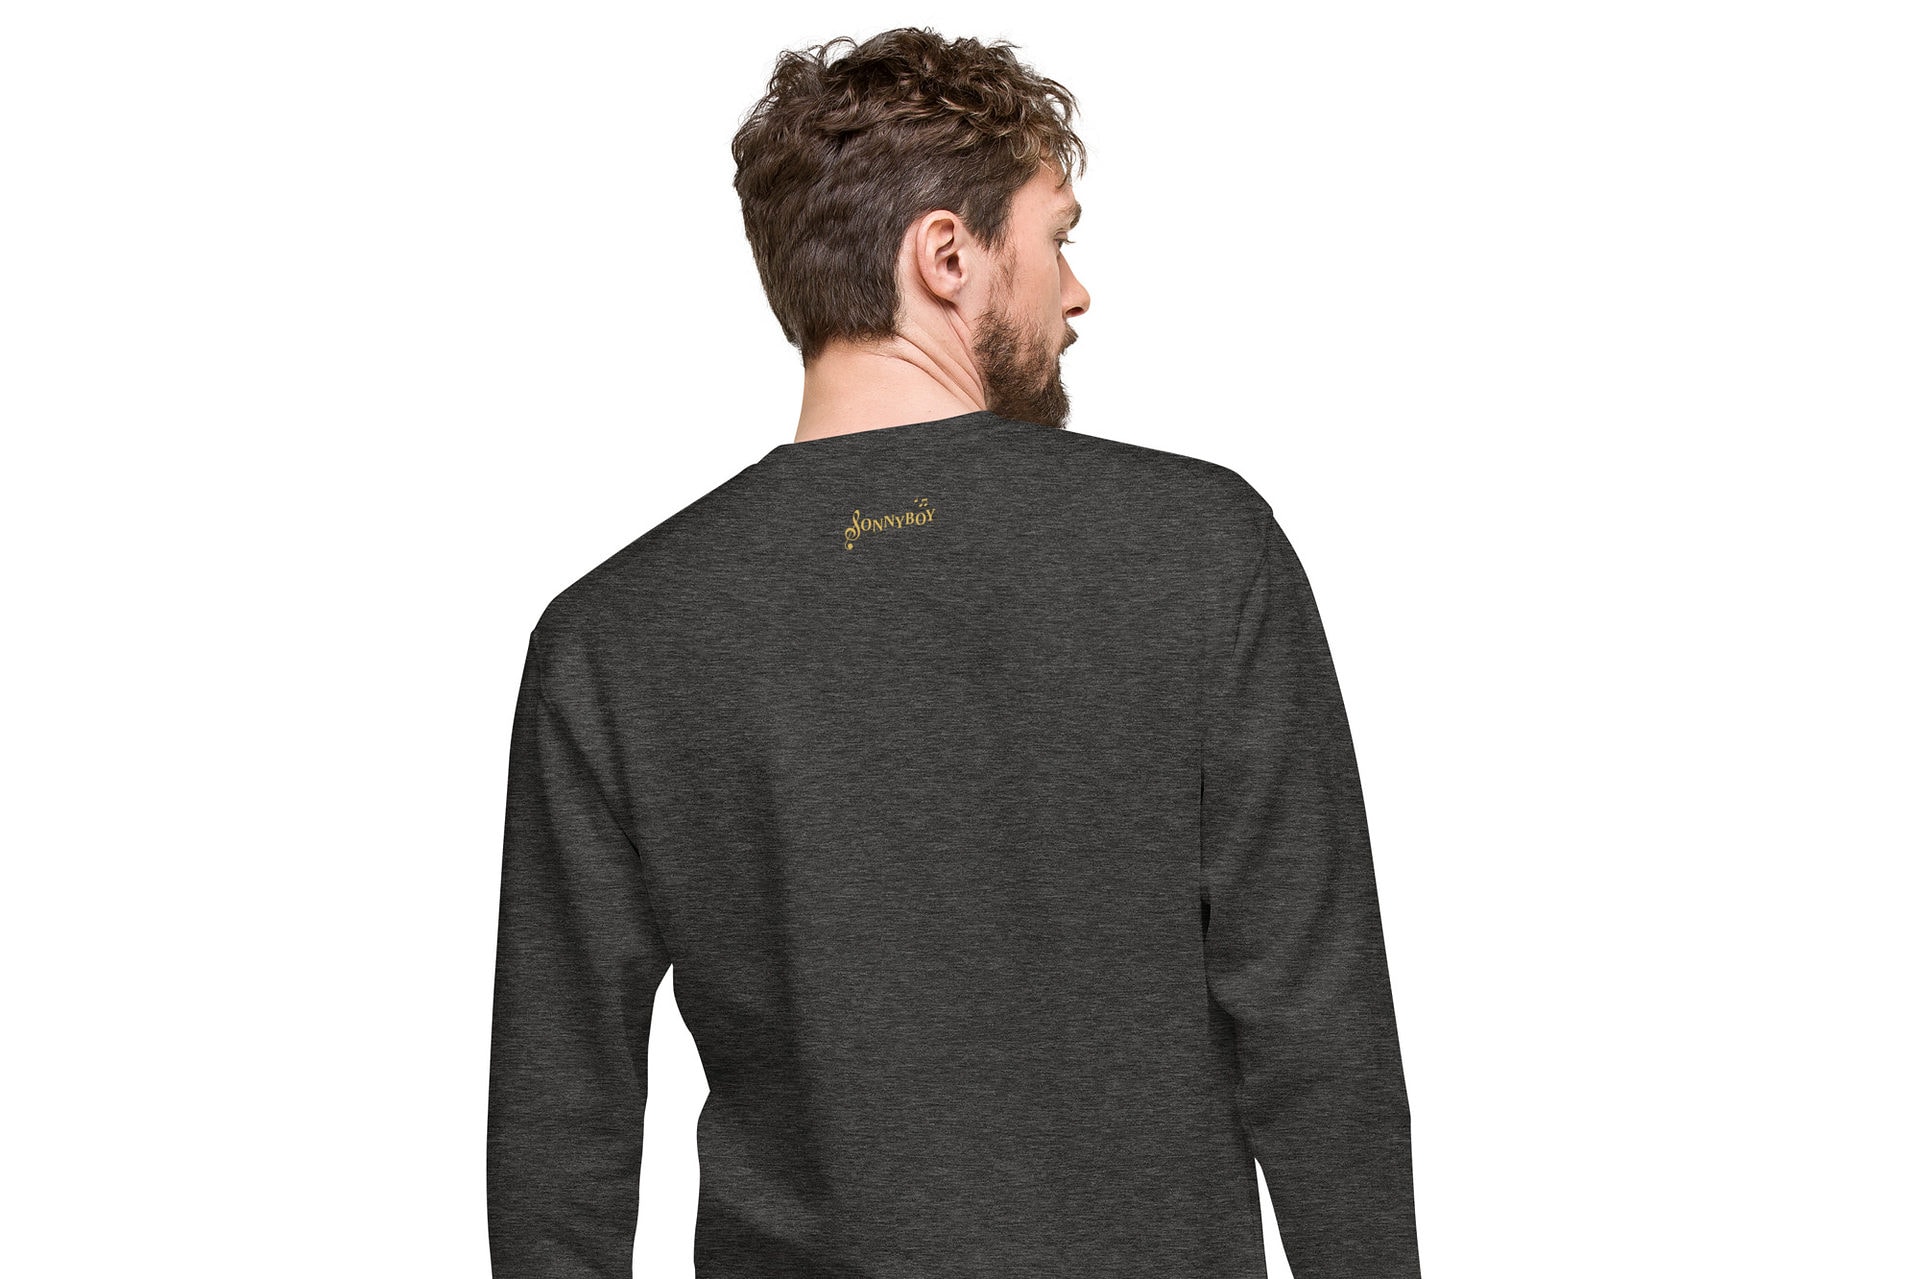 Unisex Premium Sweatshirt Charcoal Heather Back 62F9574Aa3A09